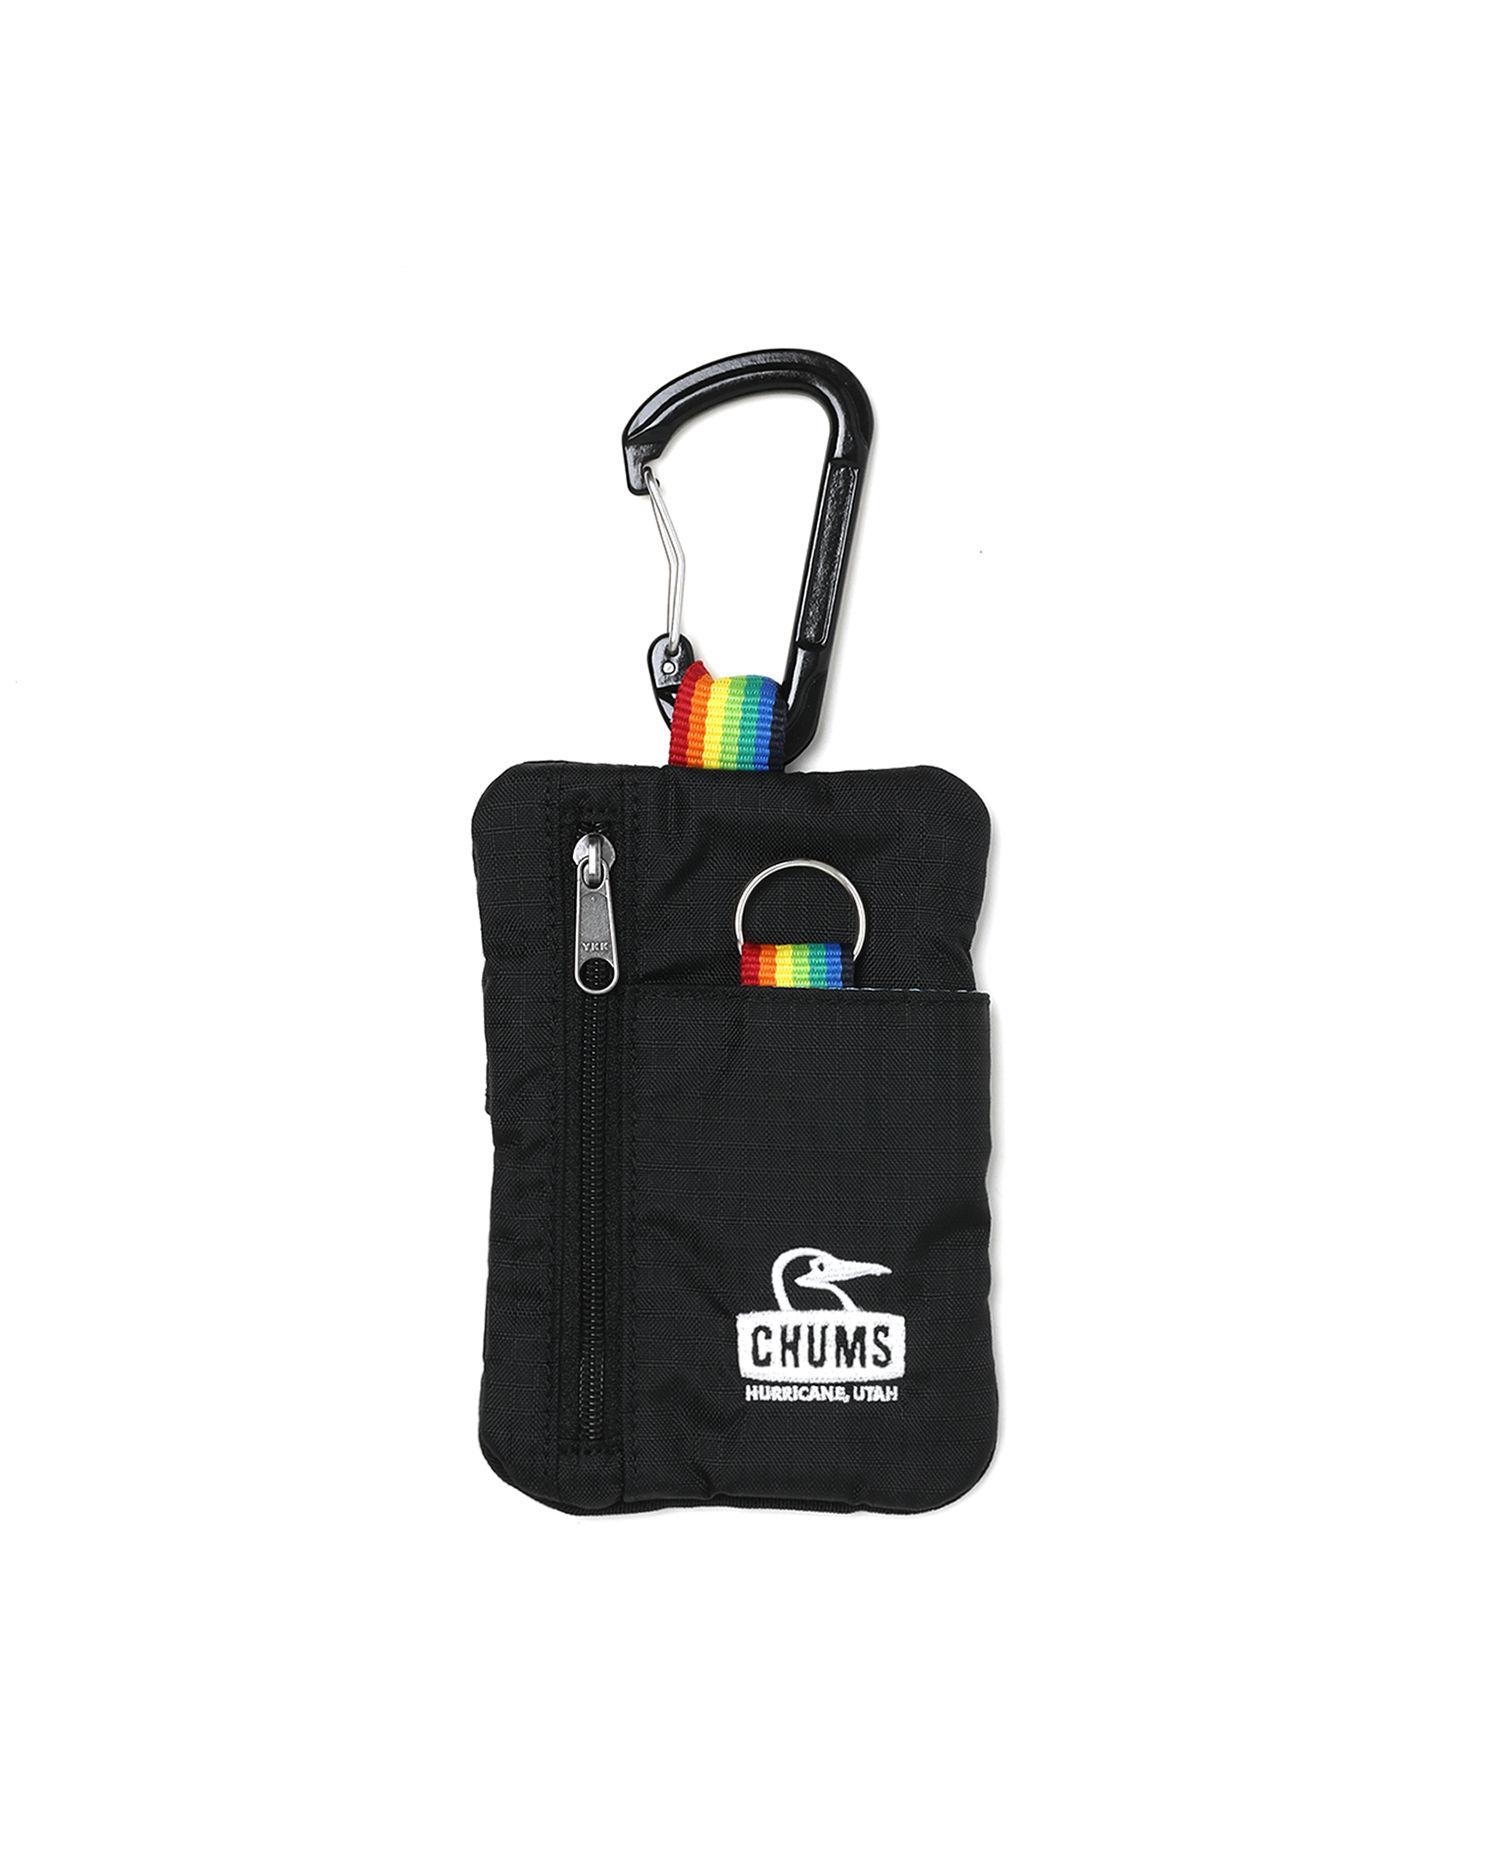 Rainbow stripe pouch by CHUMS